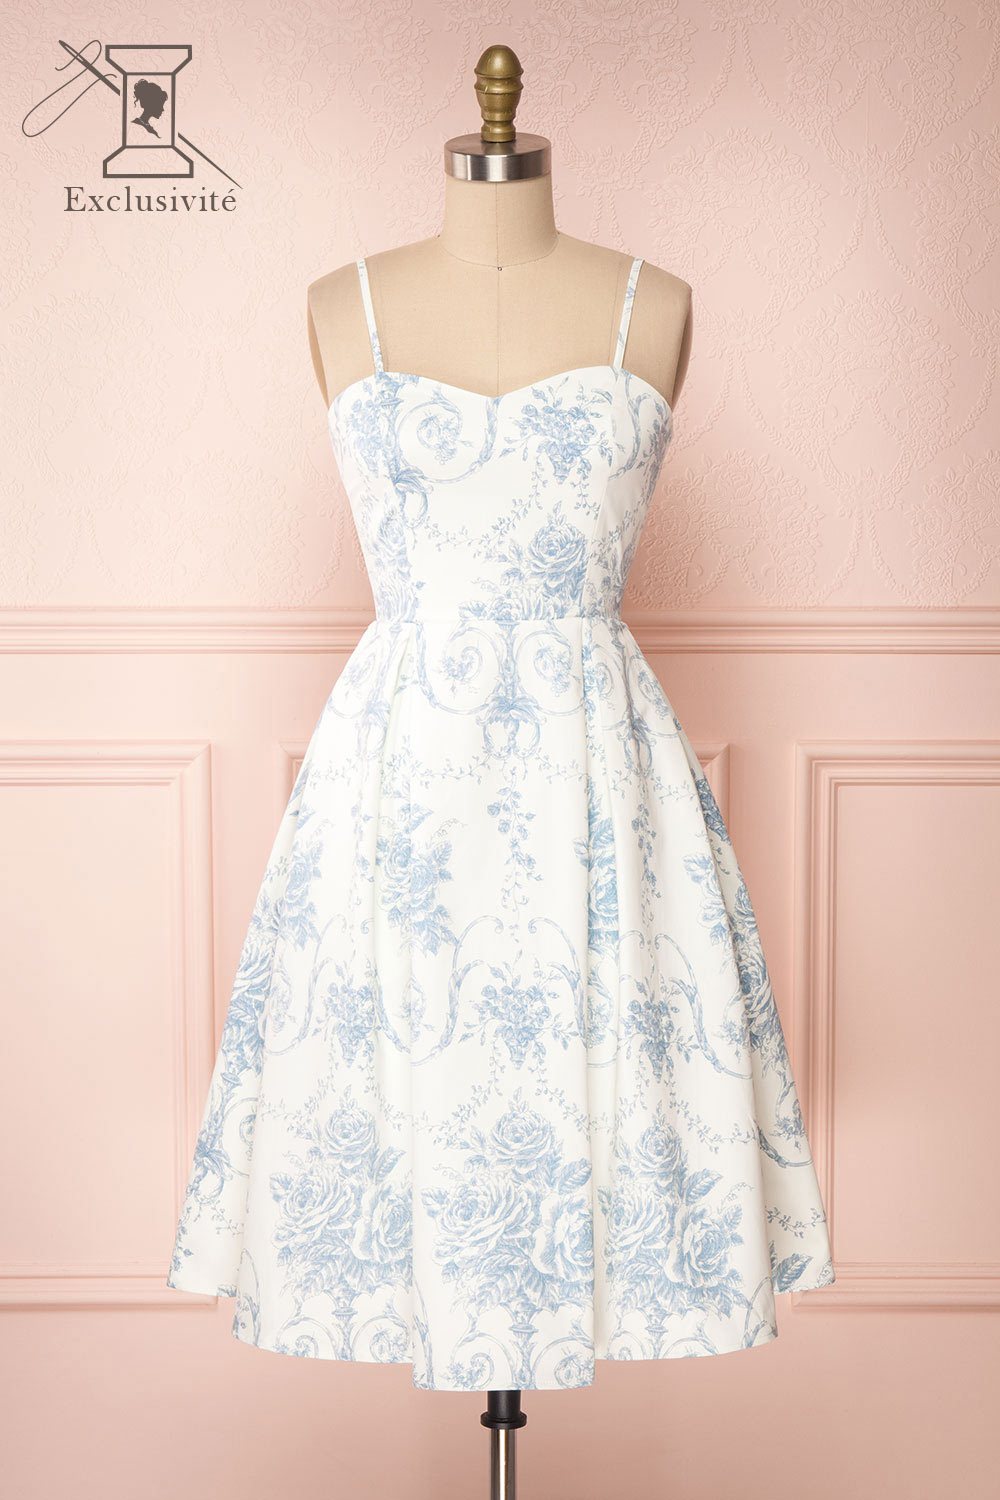 Camasene White Short Dress w/ Blue Flowers | Boutique 1861 front view 